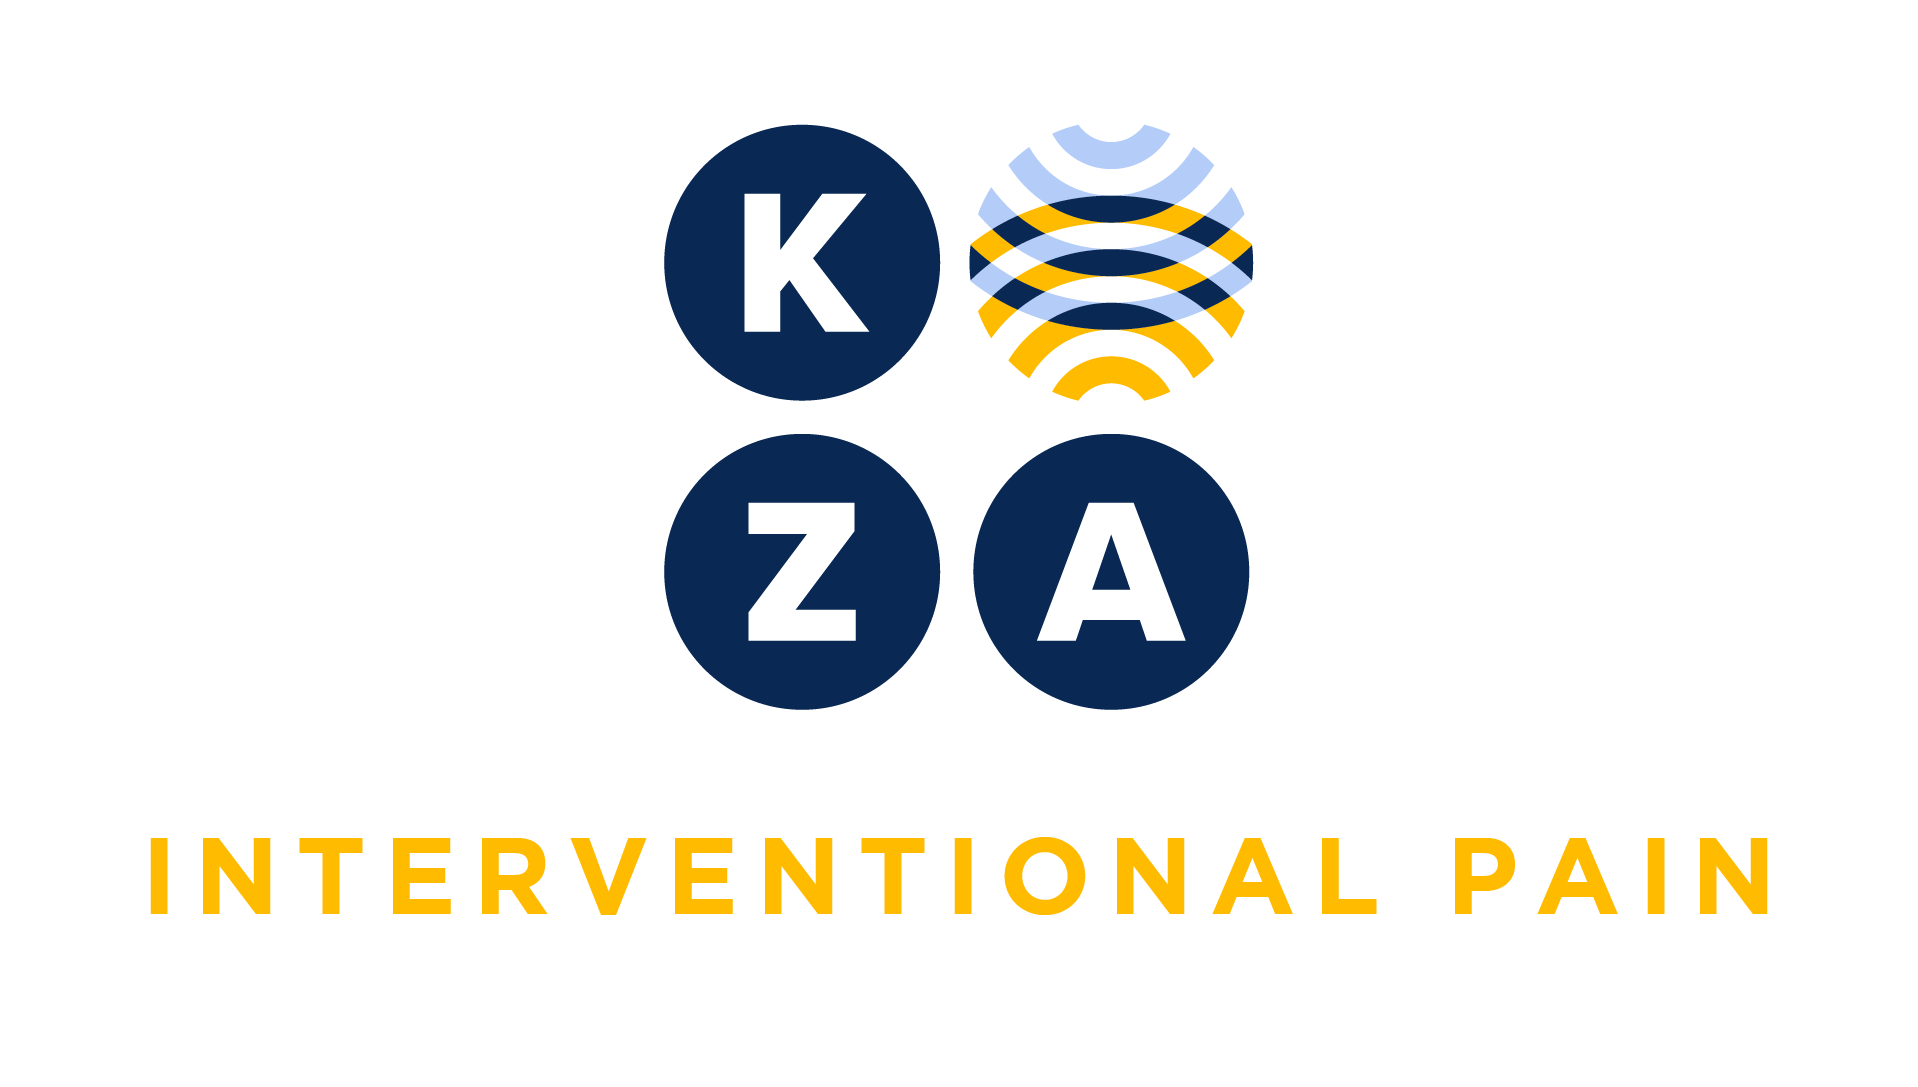 KZA - Interventional Pain - Coding Coach